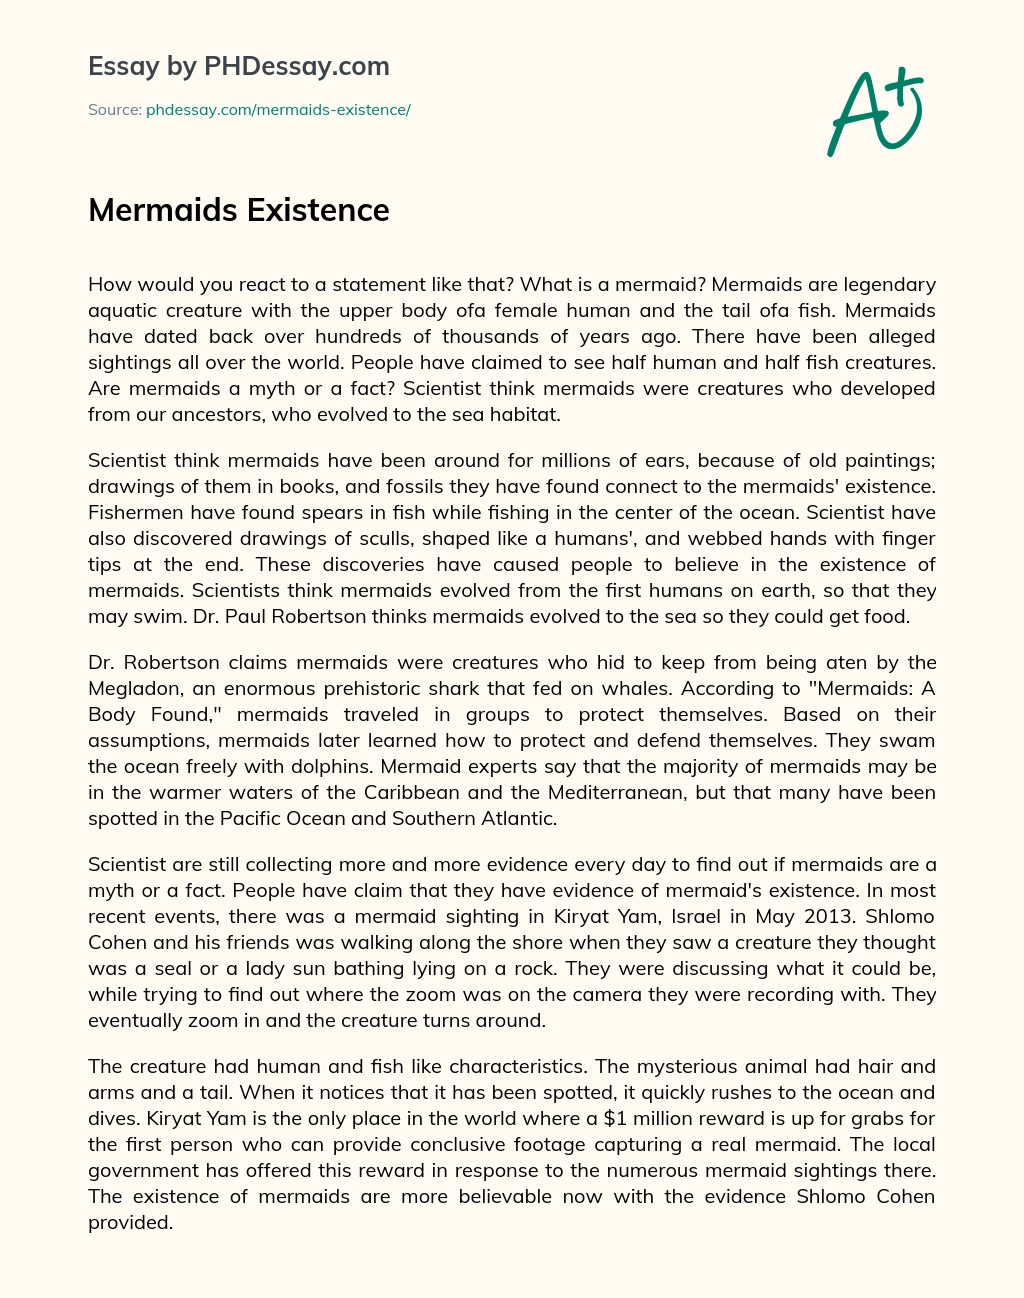 Mermaids Existence essay